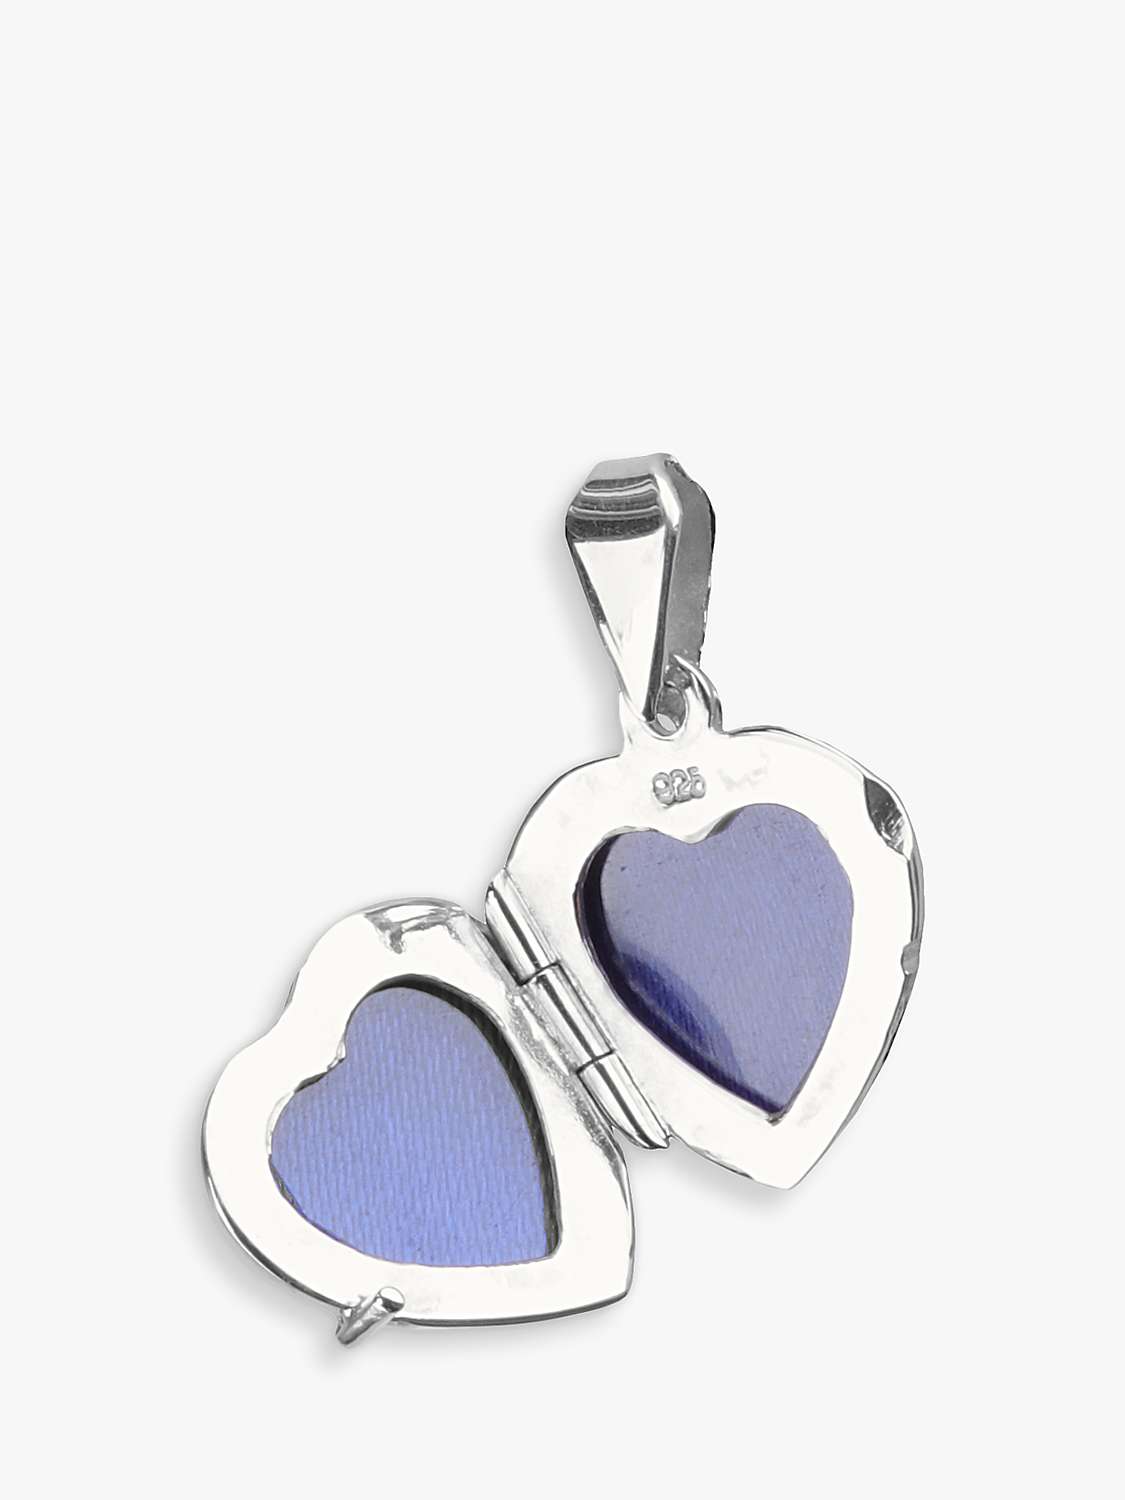 Buy Nina B Sterling Silver Heart Shaped Locket Pendant Necklace Online at johnlewis.com